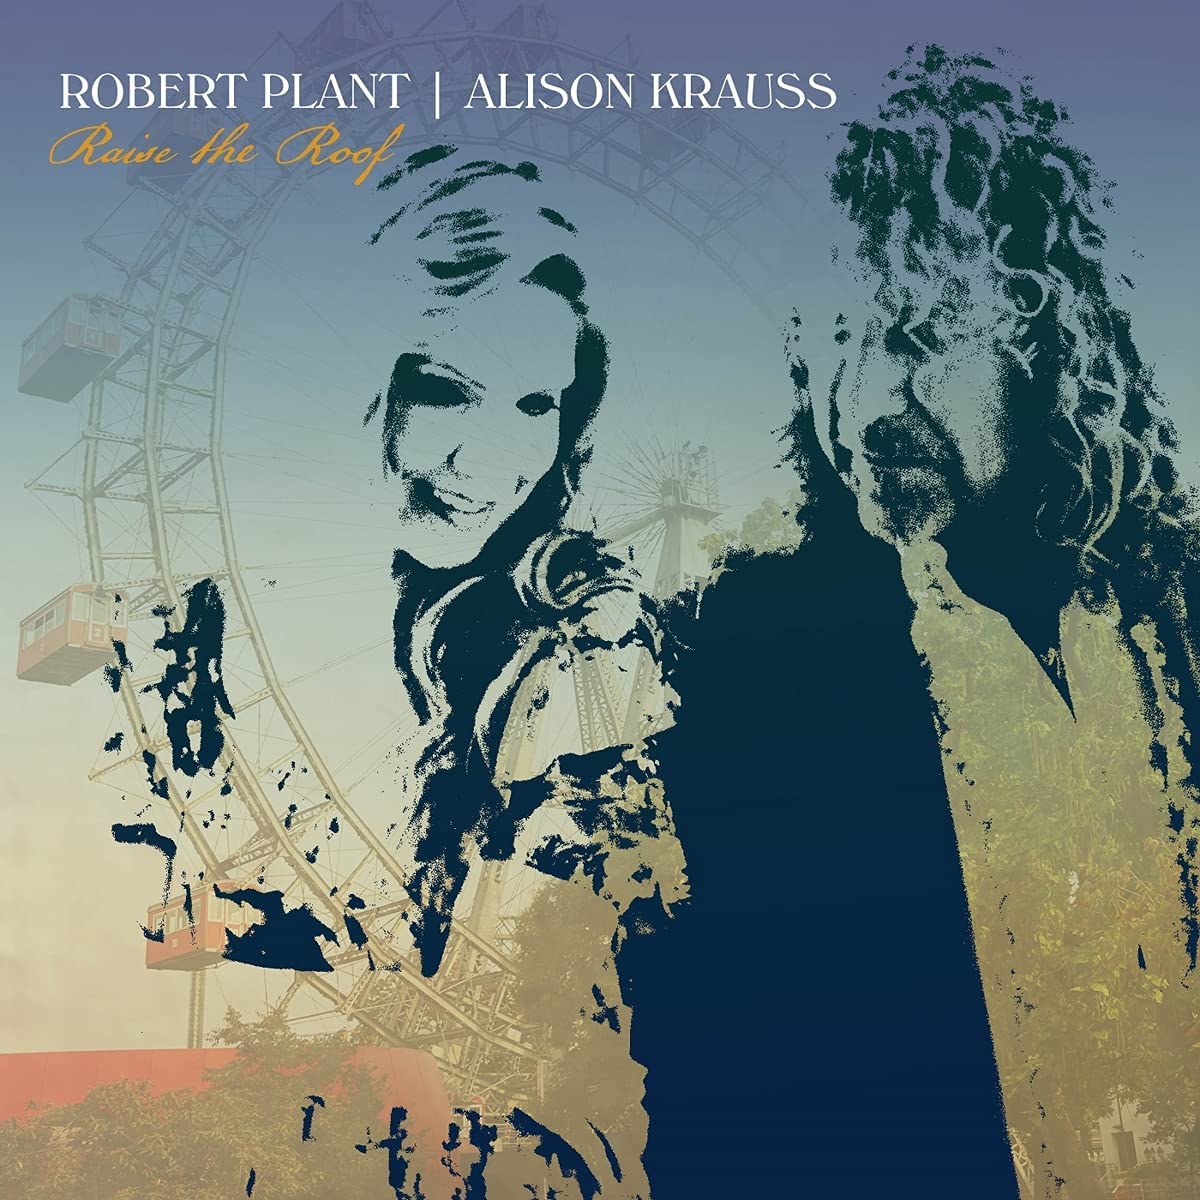 Robert Plant & Alison Krauss  Raise the Roof CD